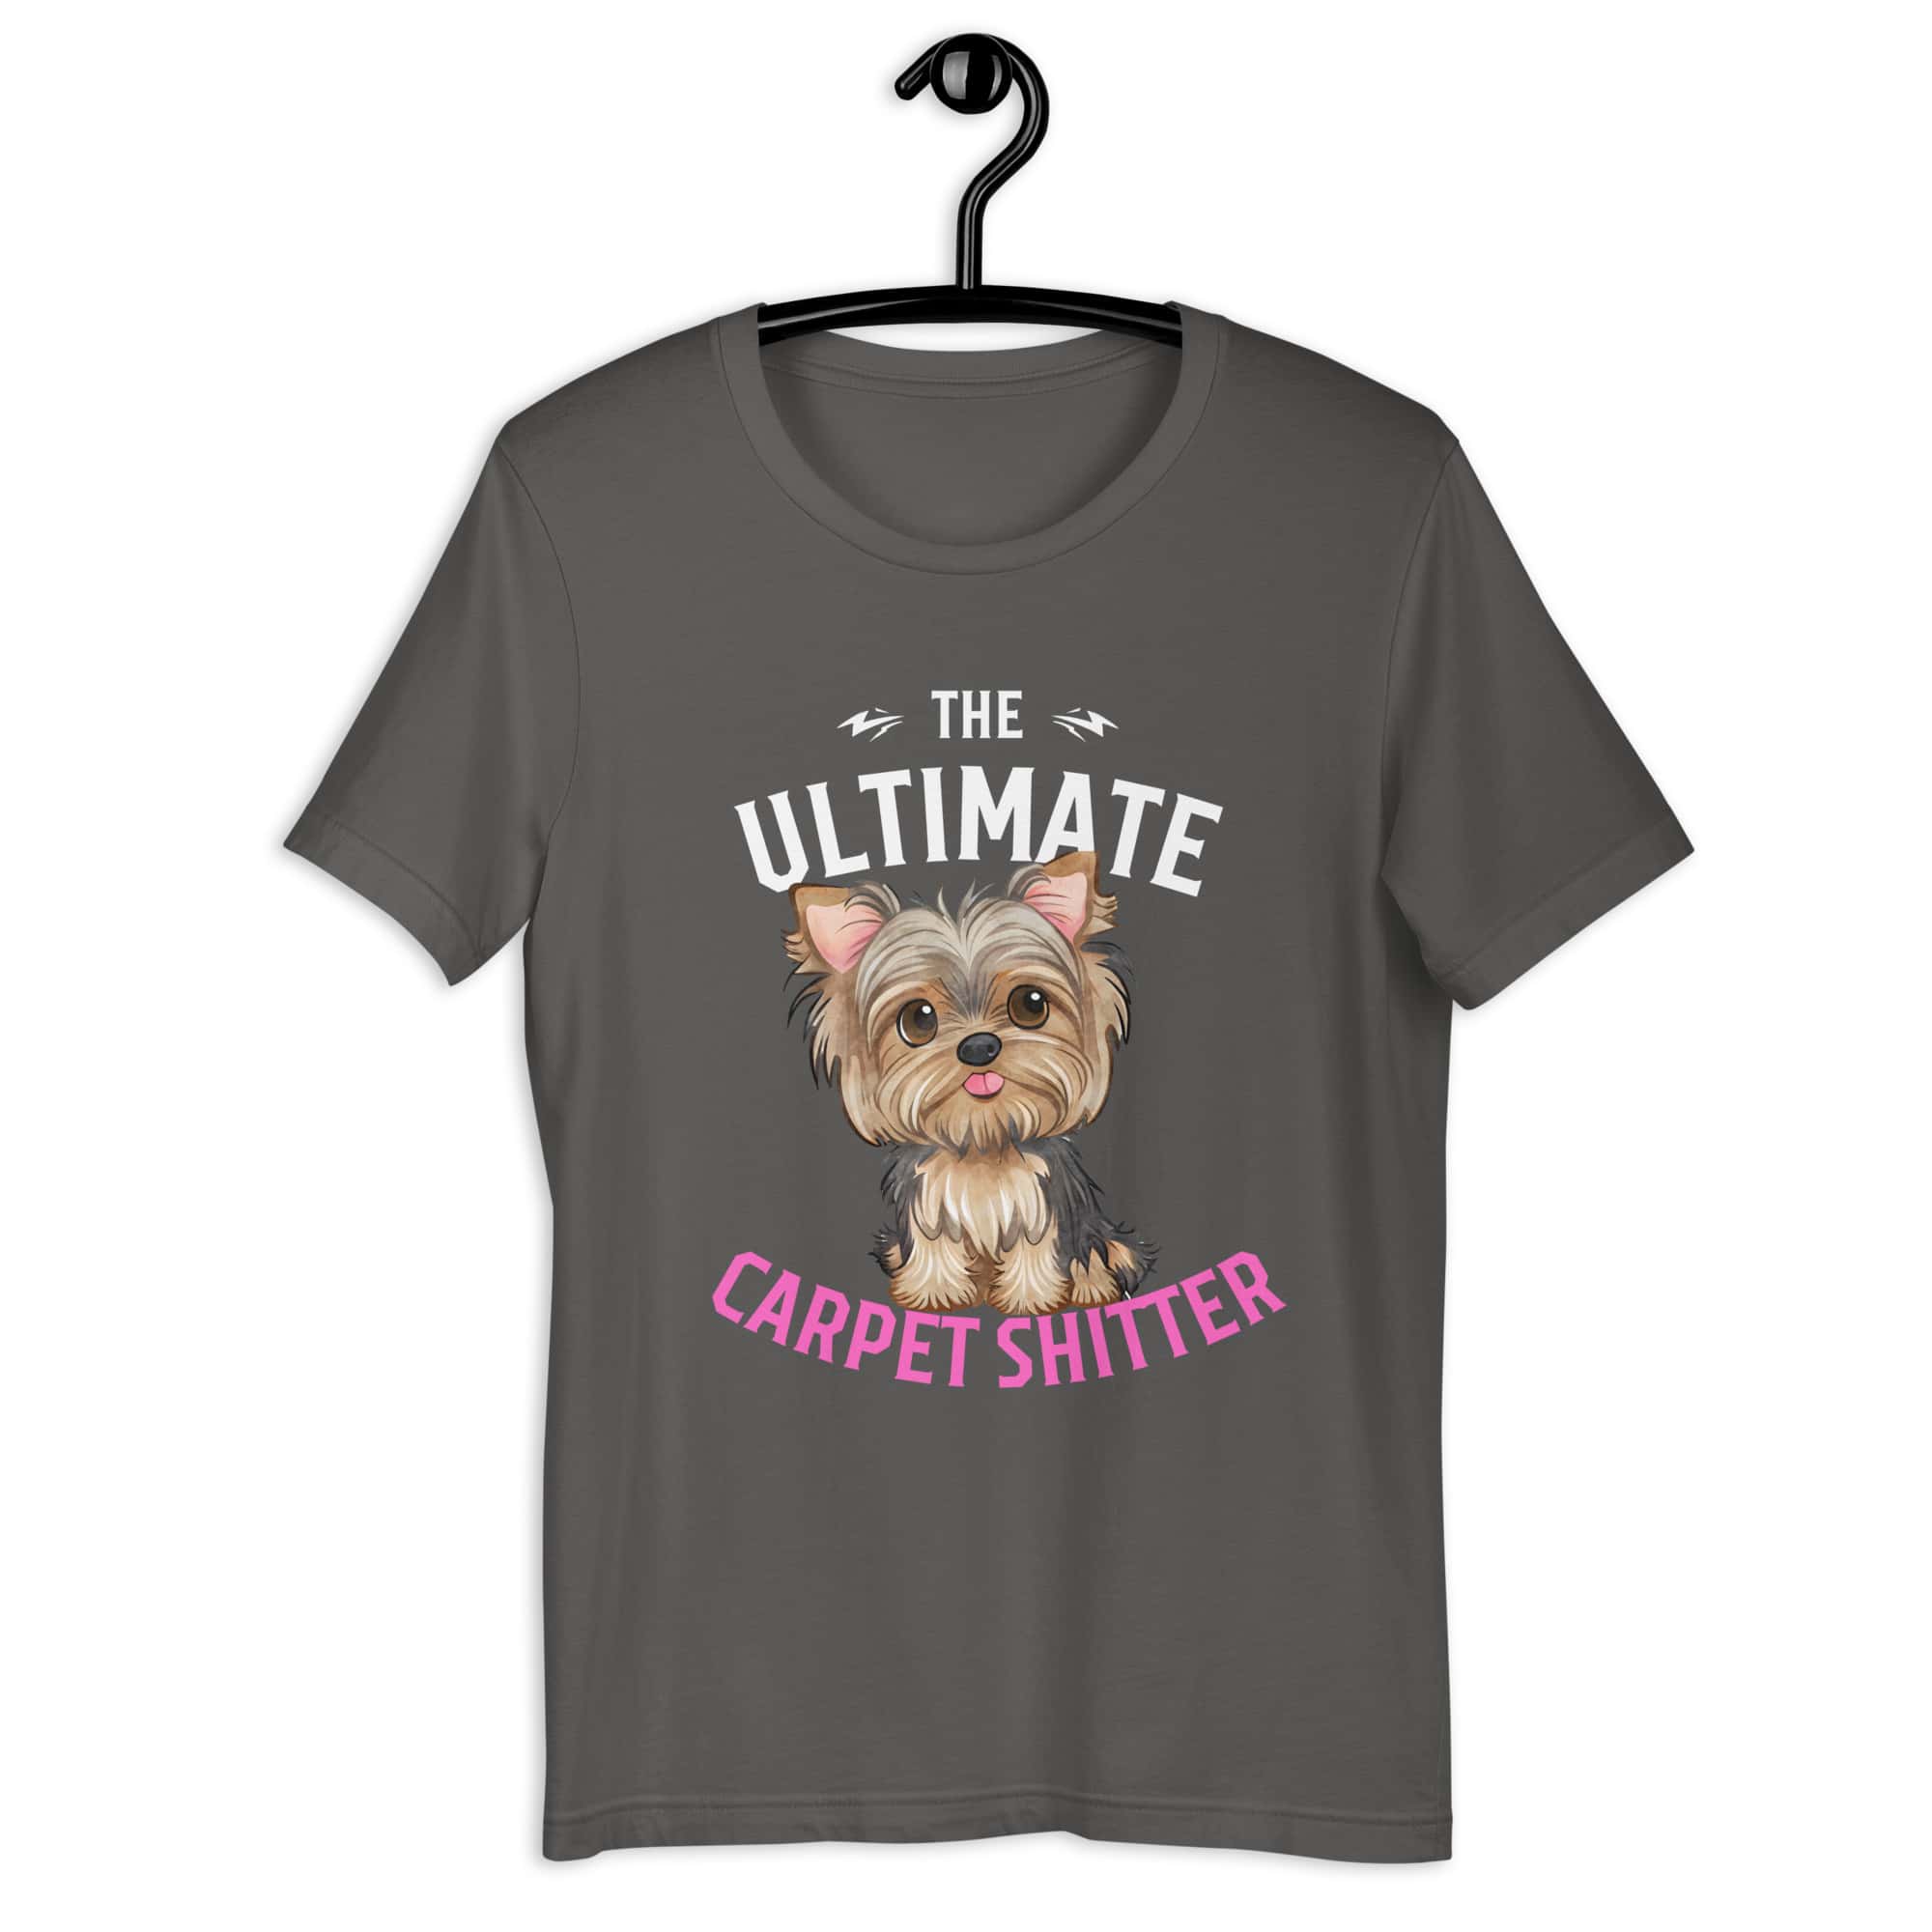 The Ultimate Carpet Shitter Funny Yorkshire Terrier Unisex T-Shirt gray